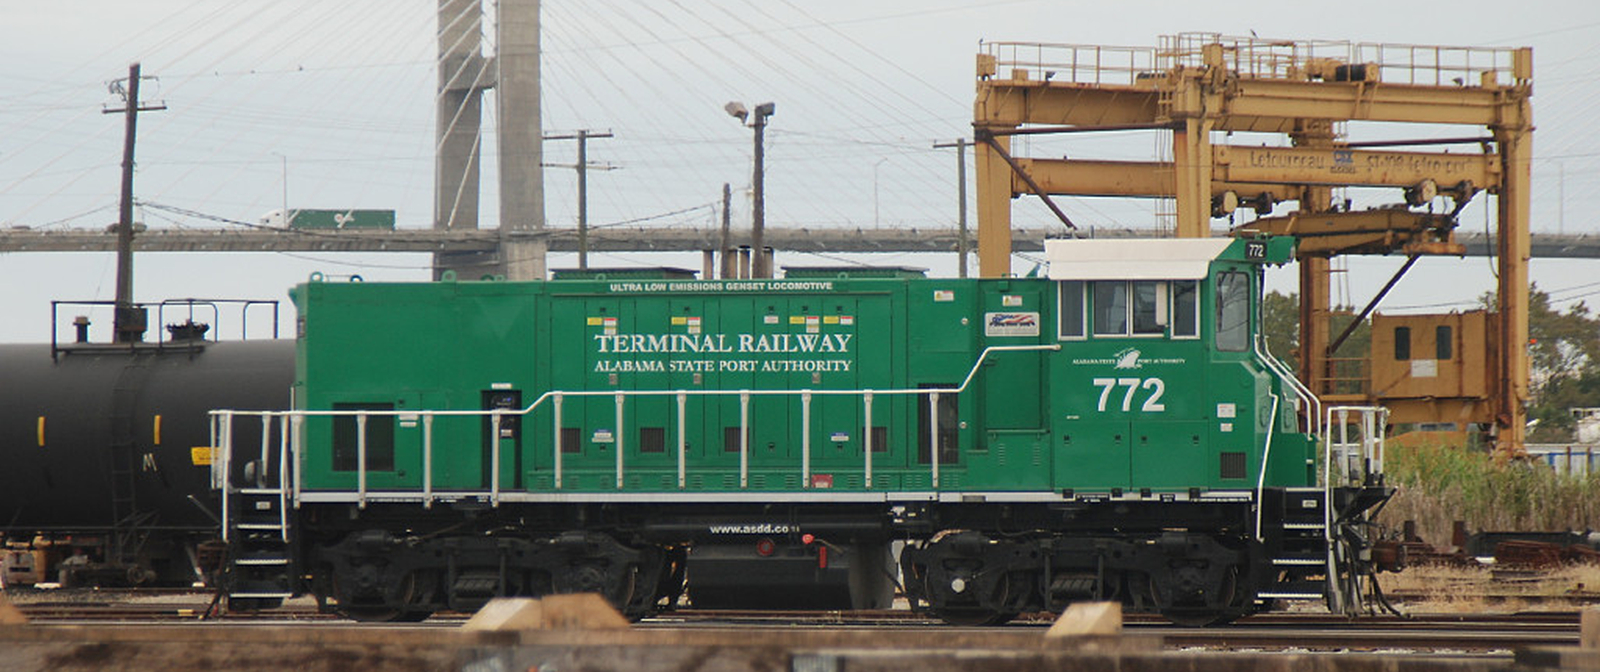 Terminal Railway Alabama State Docks No. 772 in November 2016 in Mobile, Alabama